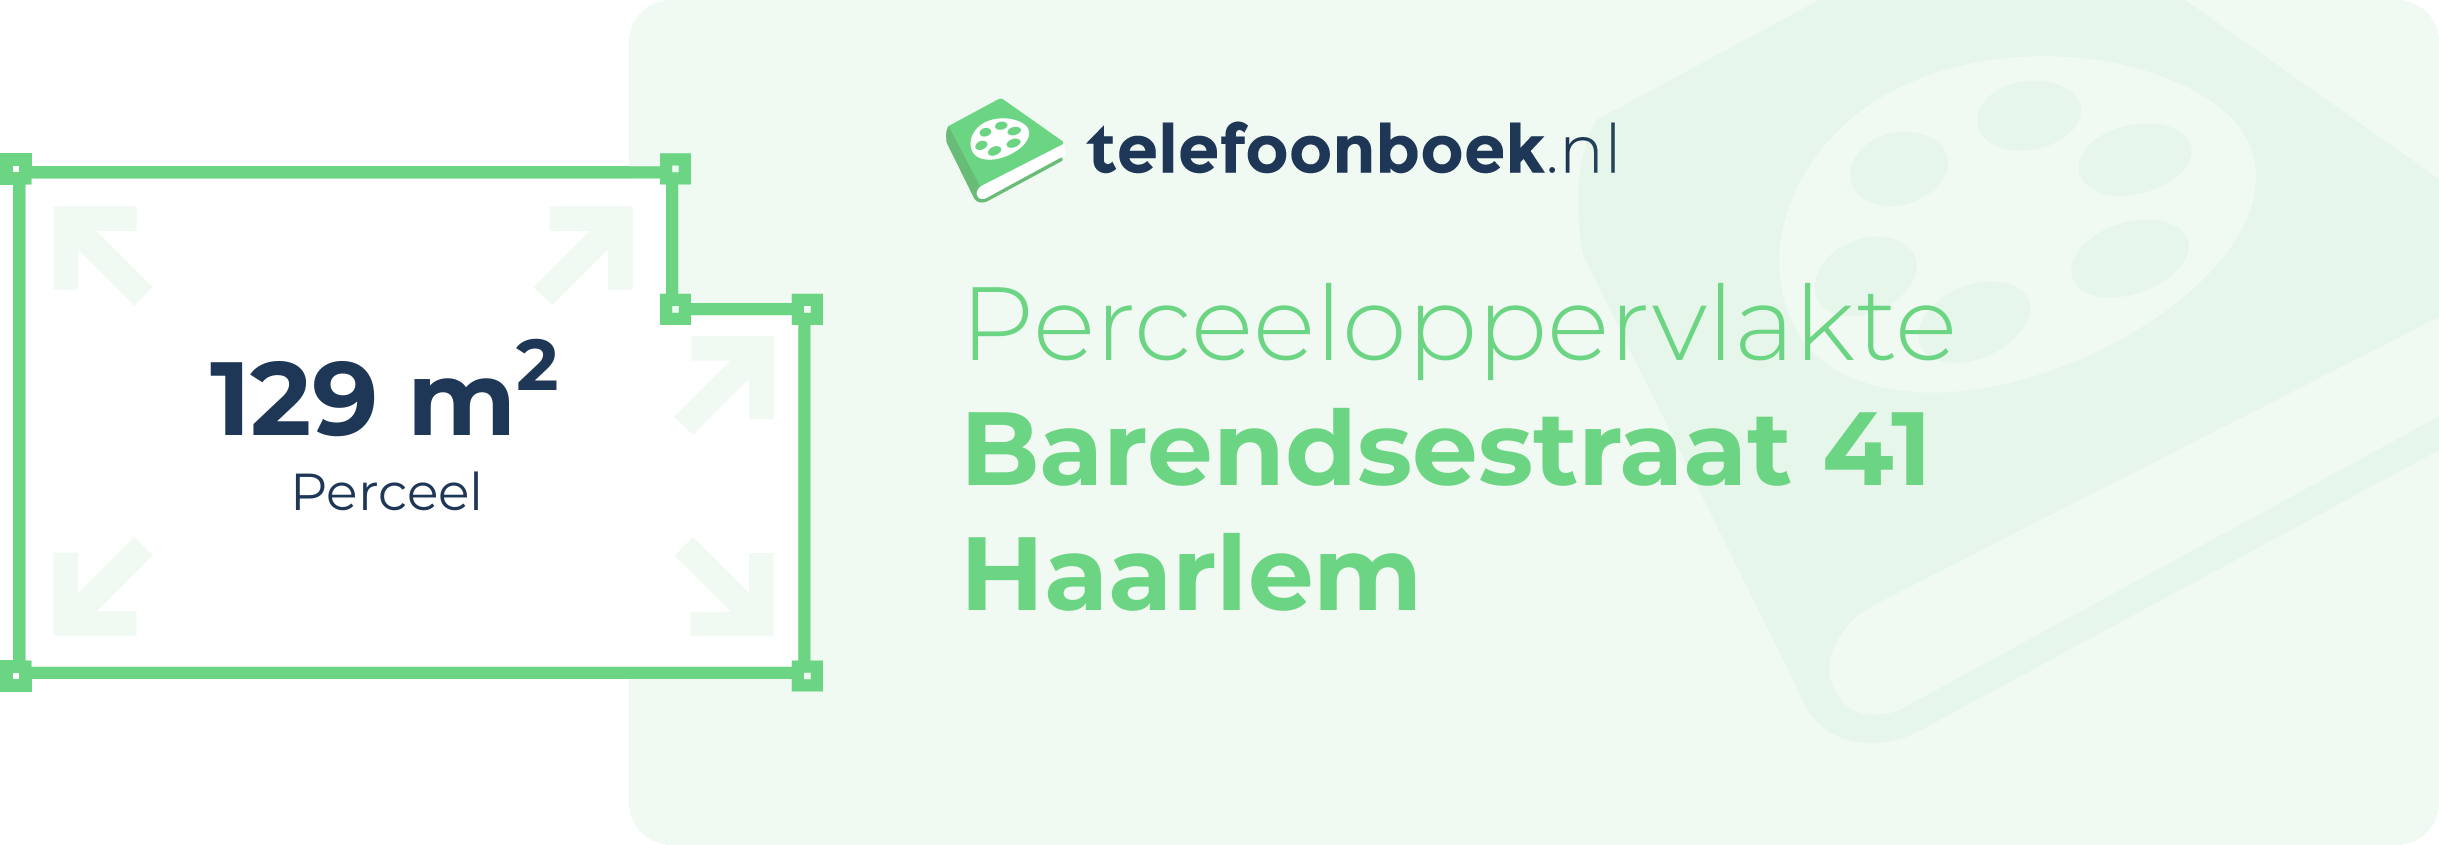 Perceeloppervlakte Barendsestraat 41 Haarlem